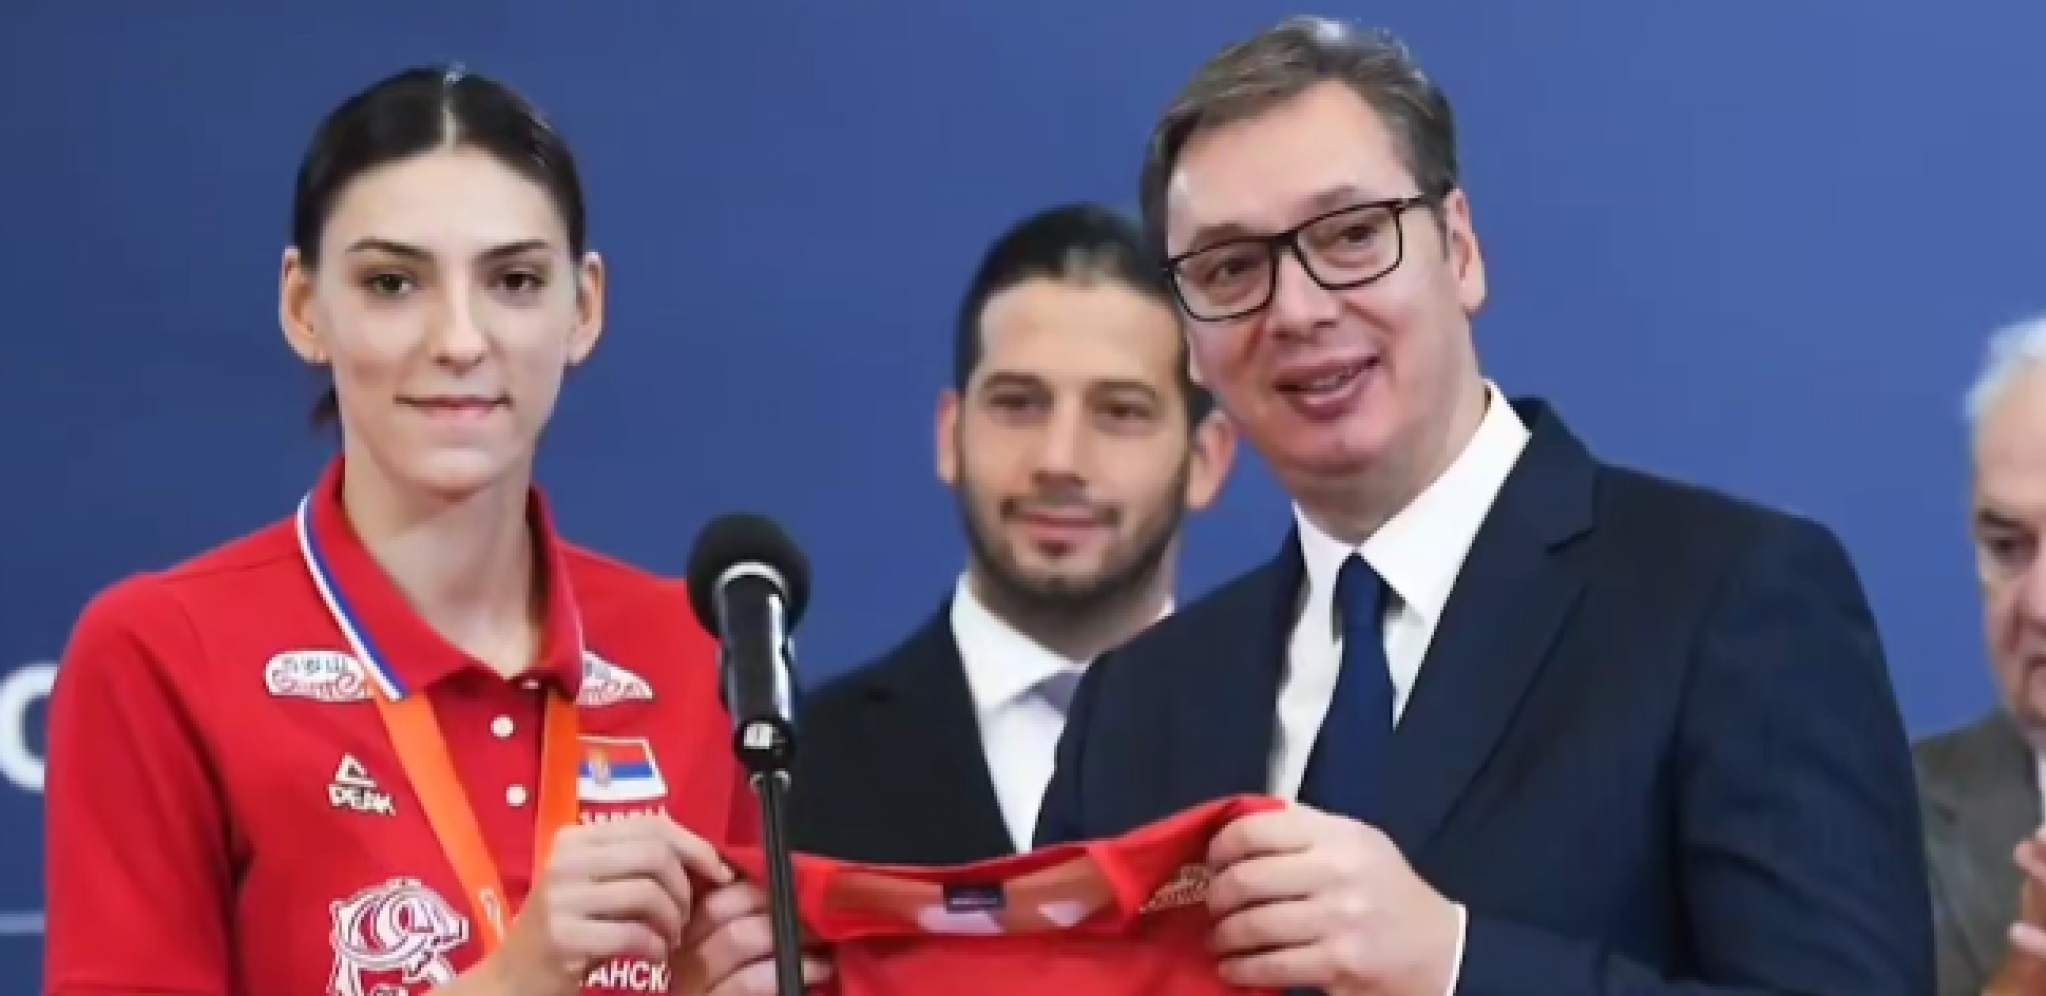 NEDELJA SA PREDSEDNIKOM Vučić podelio novi snimak na Instagramu (VIDEO)